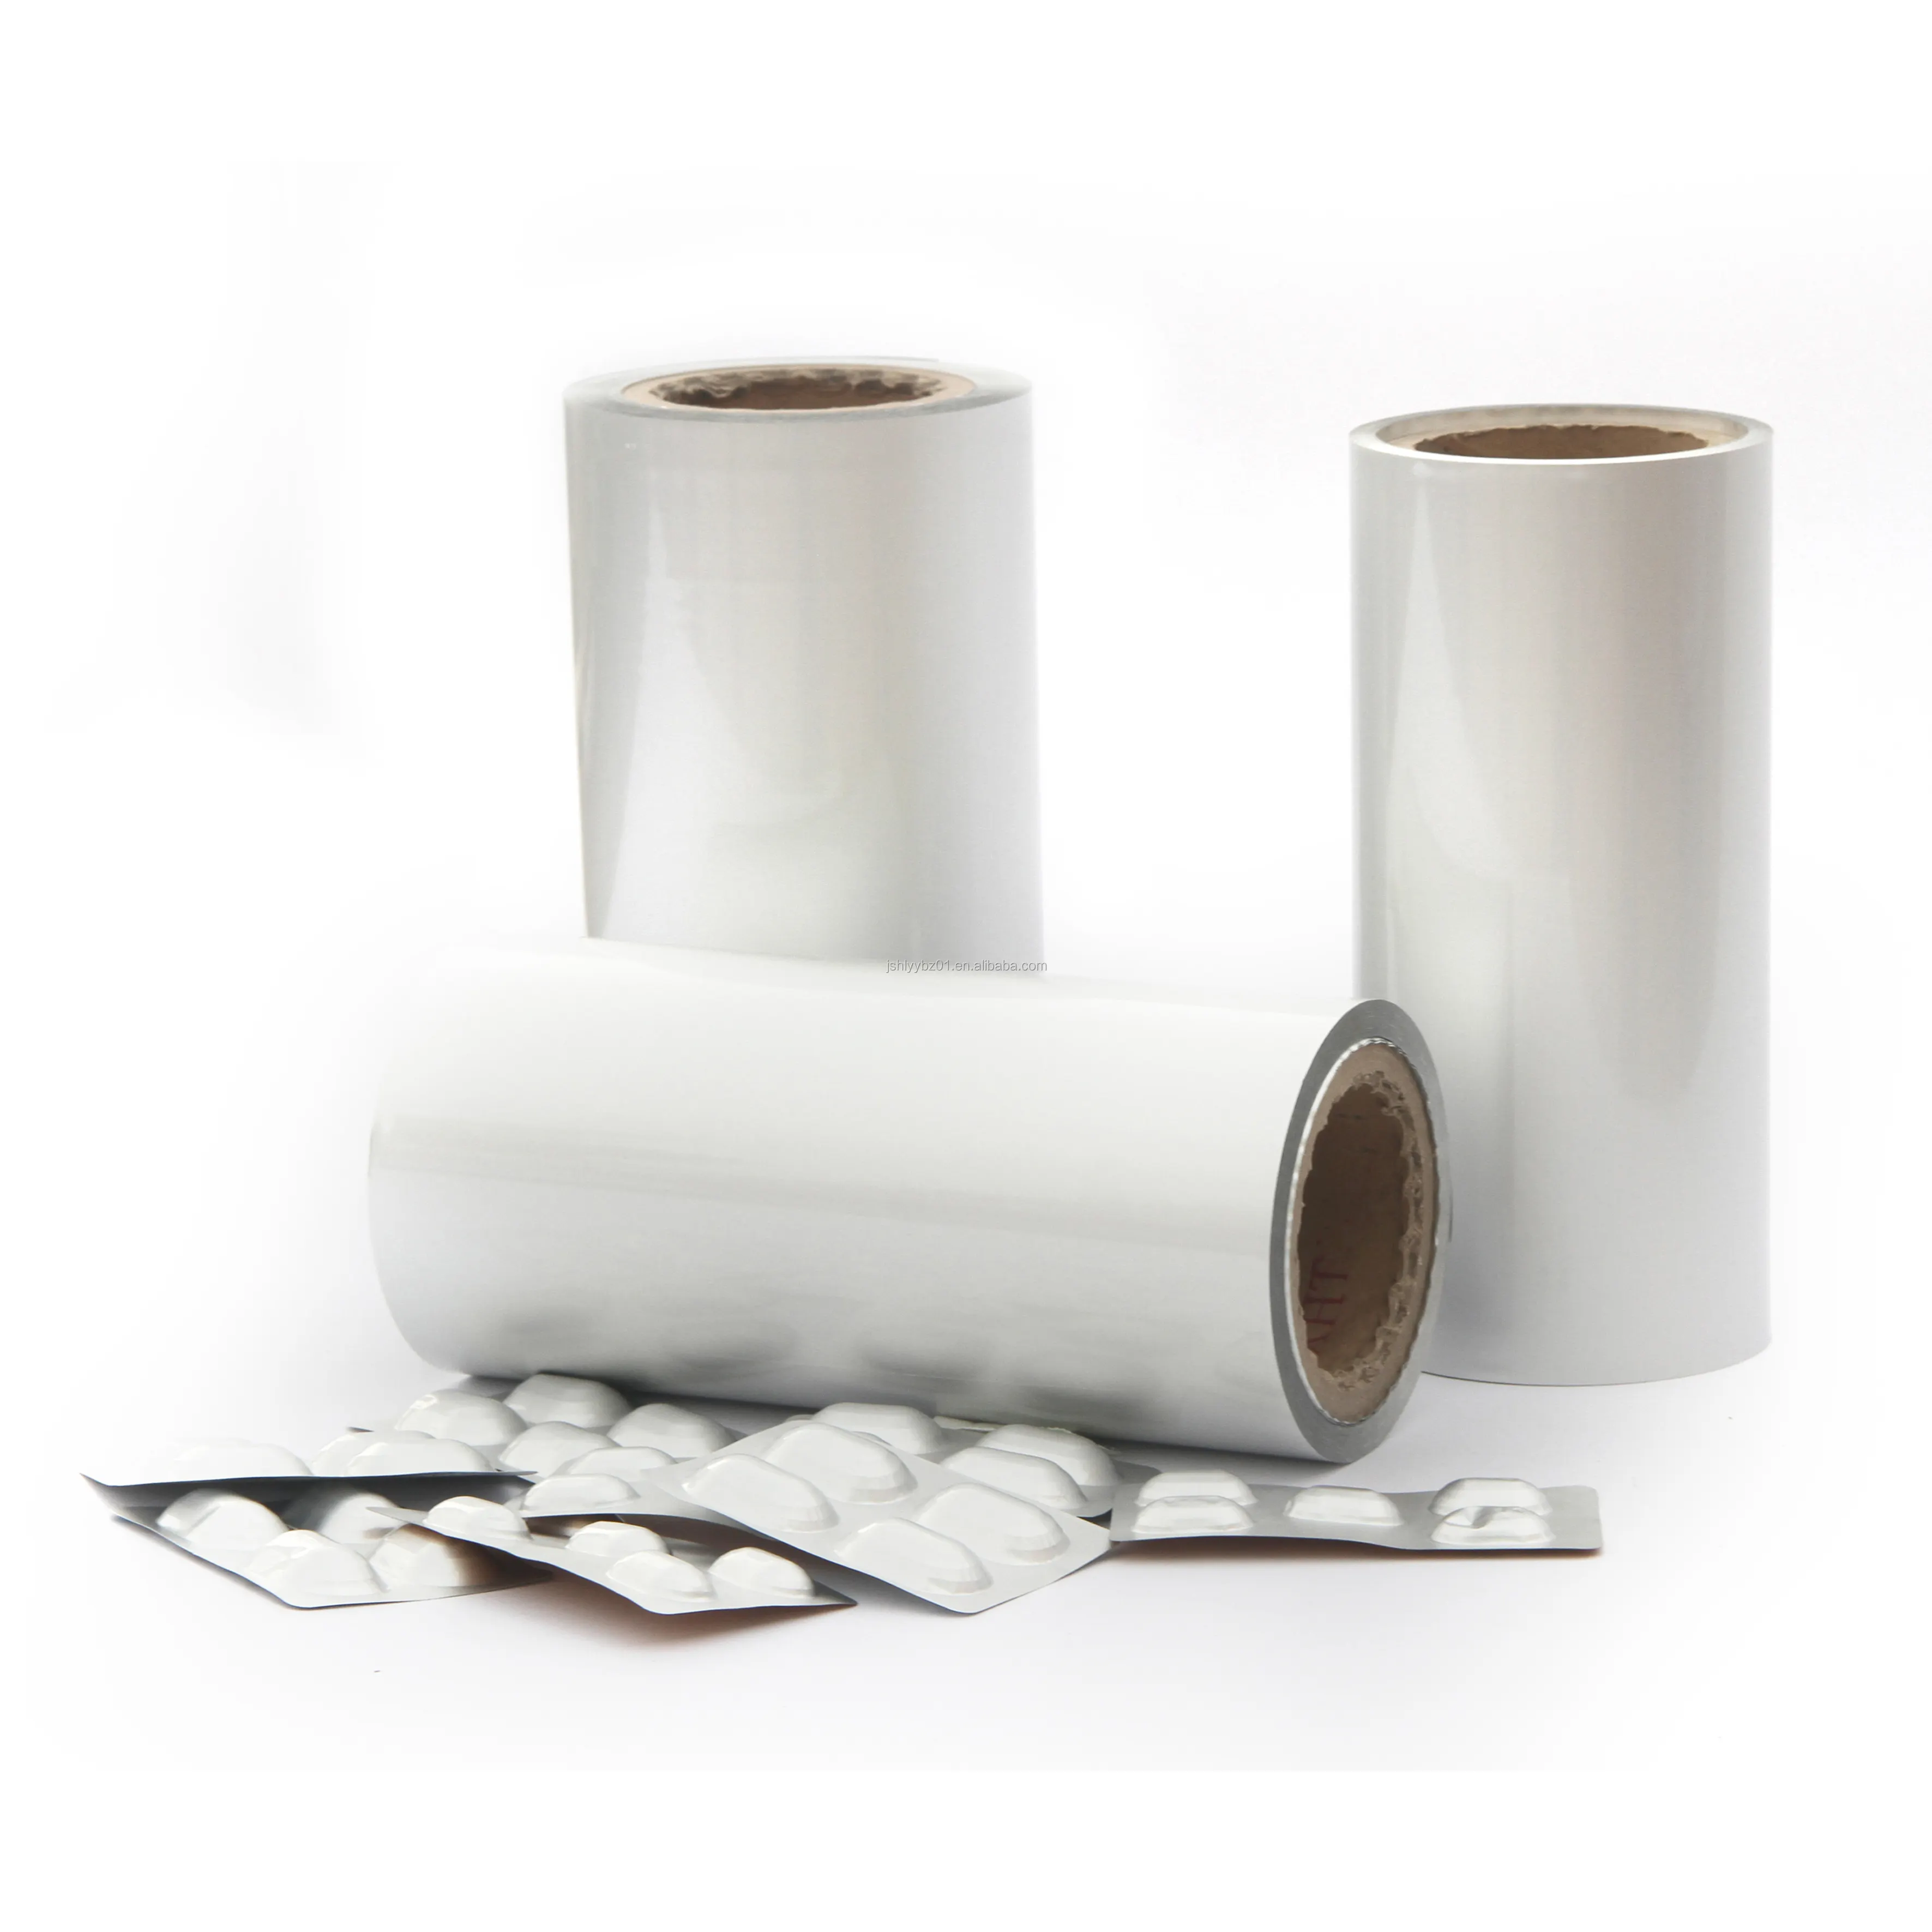 Kalt geformte Tabletten verpackung aus Aluminium blasen folie